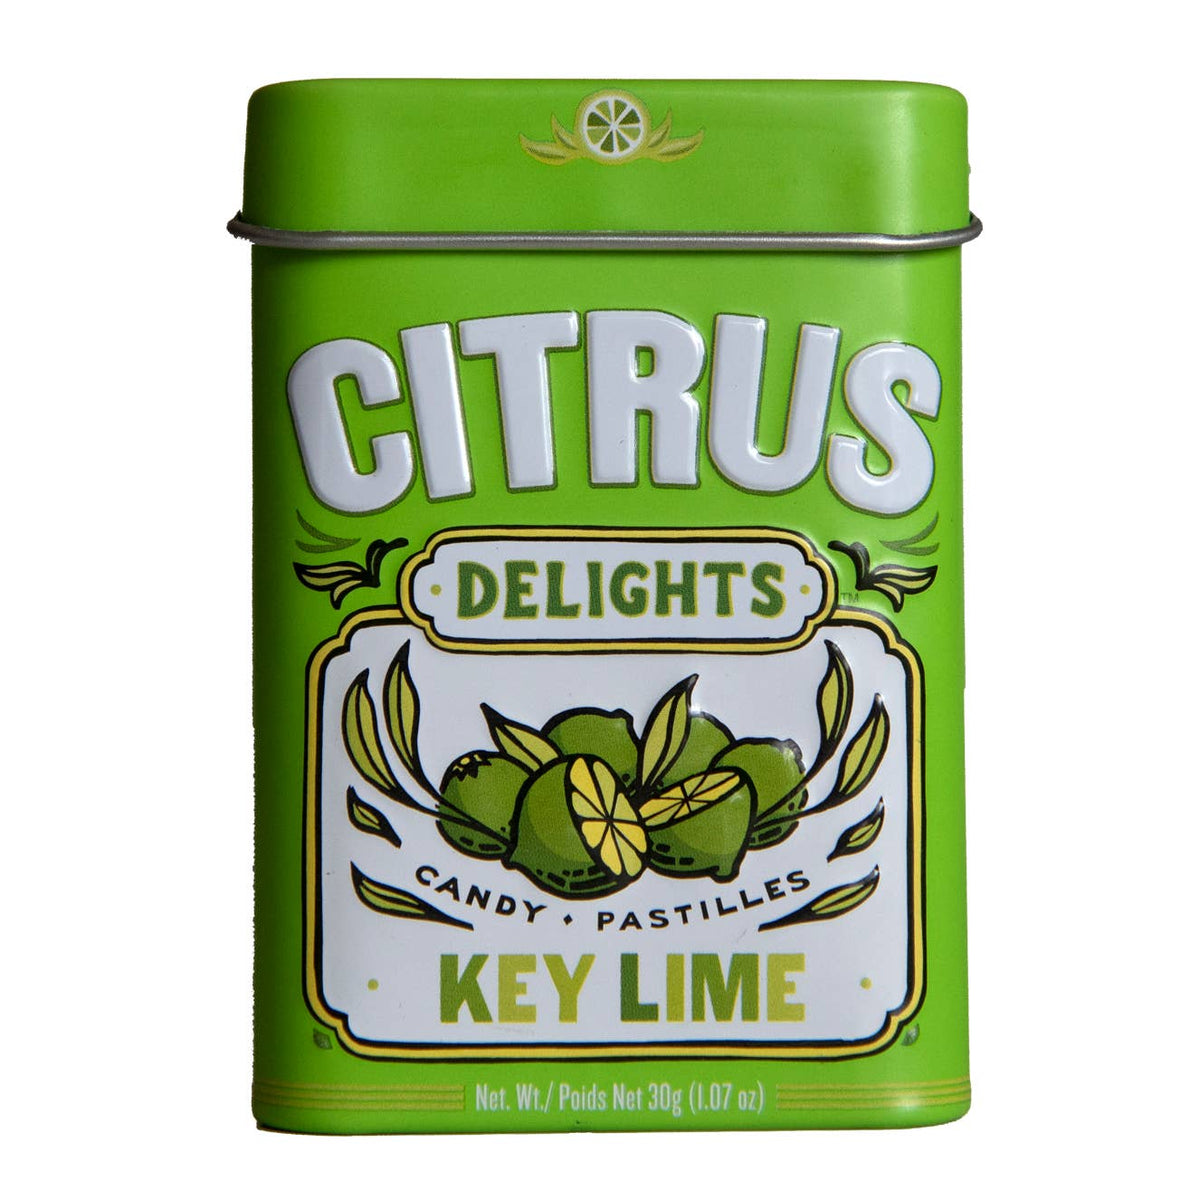 Key Lime Candy Pastilles